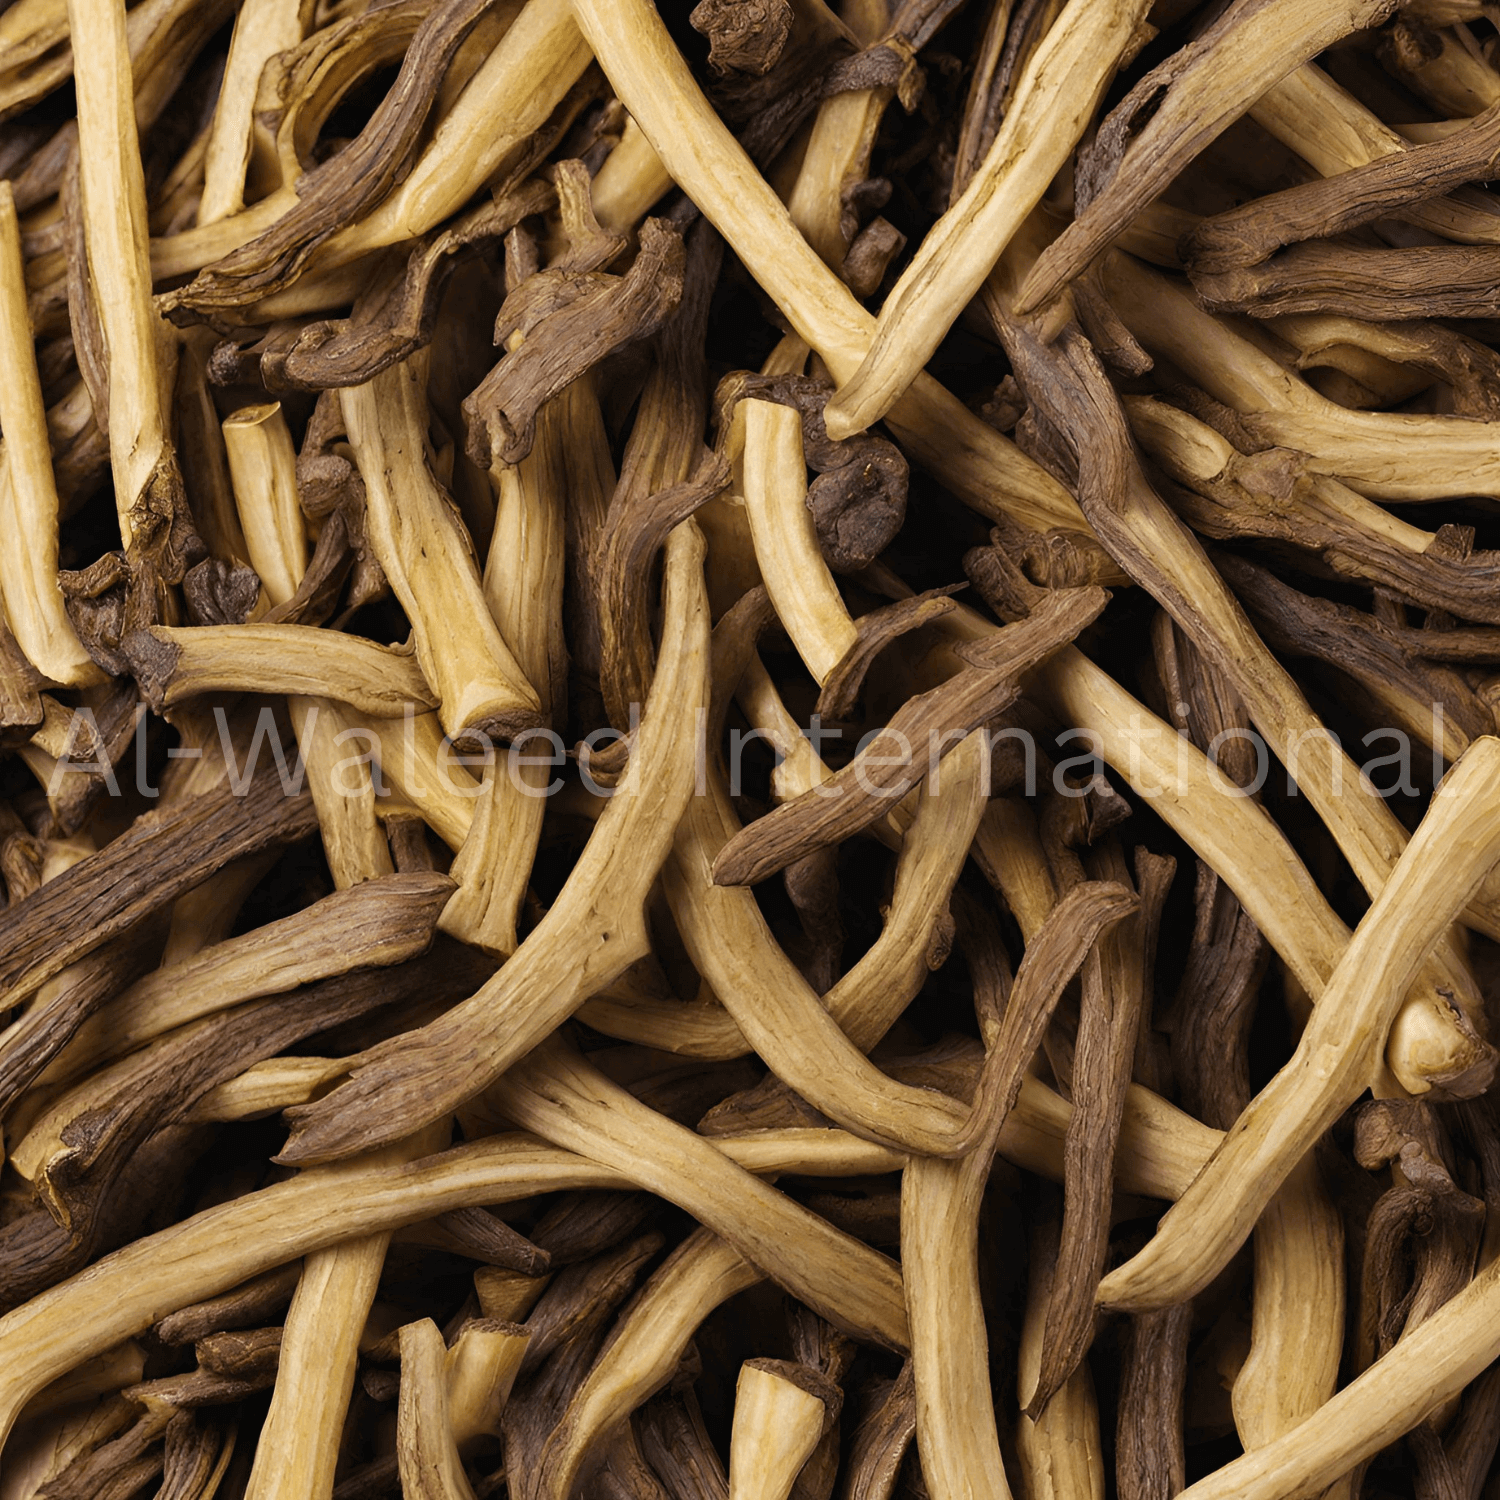 Licorice Roots Natural Cut (Glycyrrhiza Glabra) - Al Waleed International